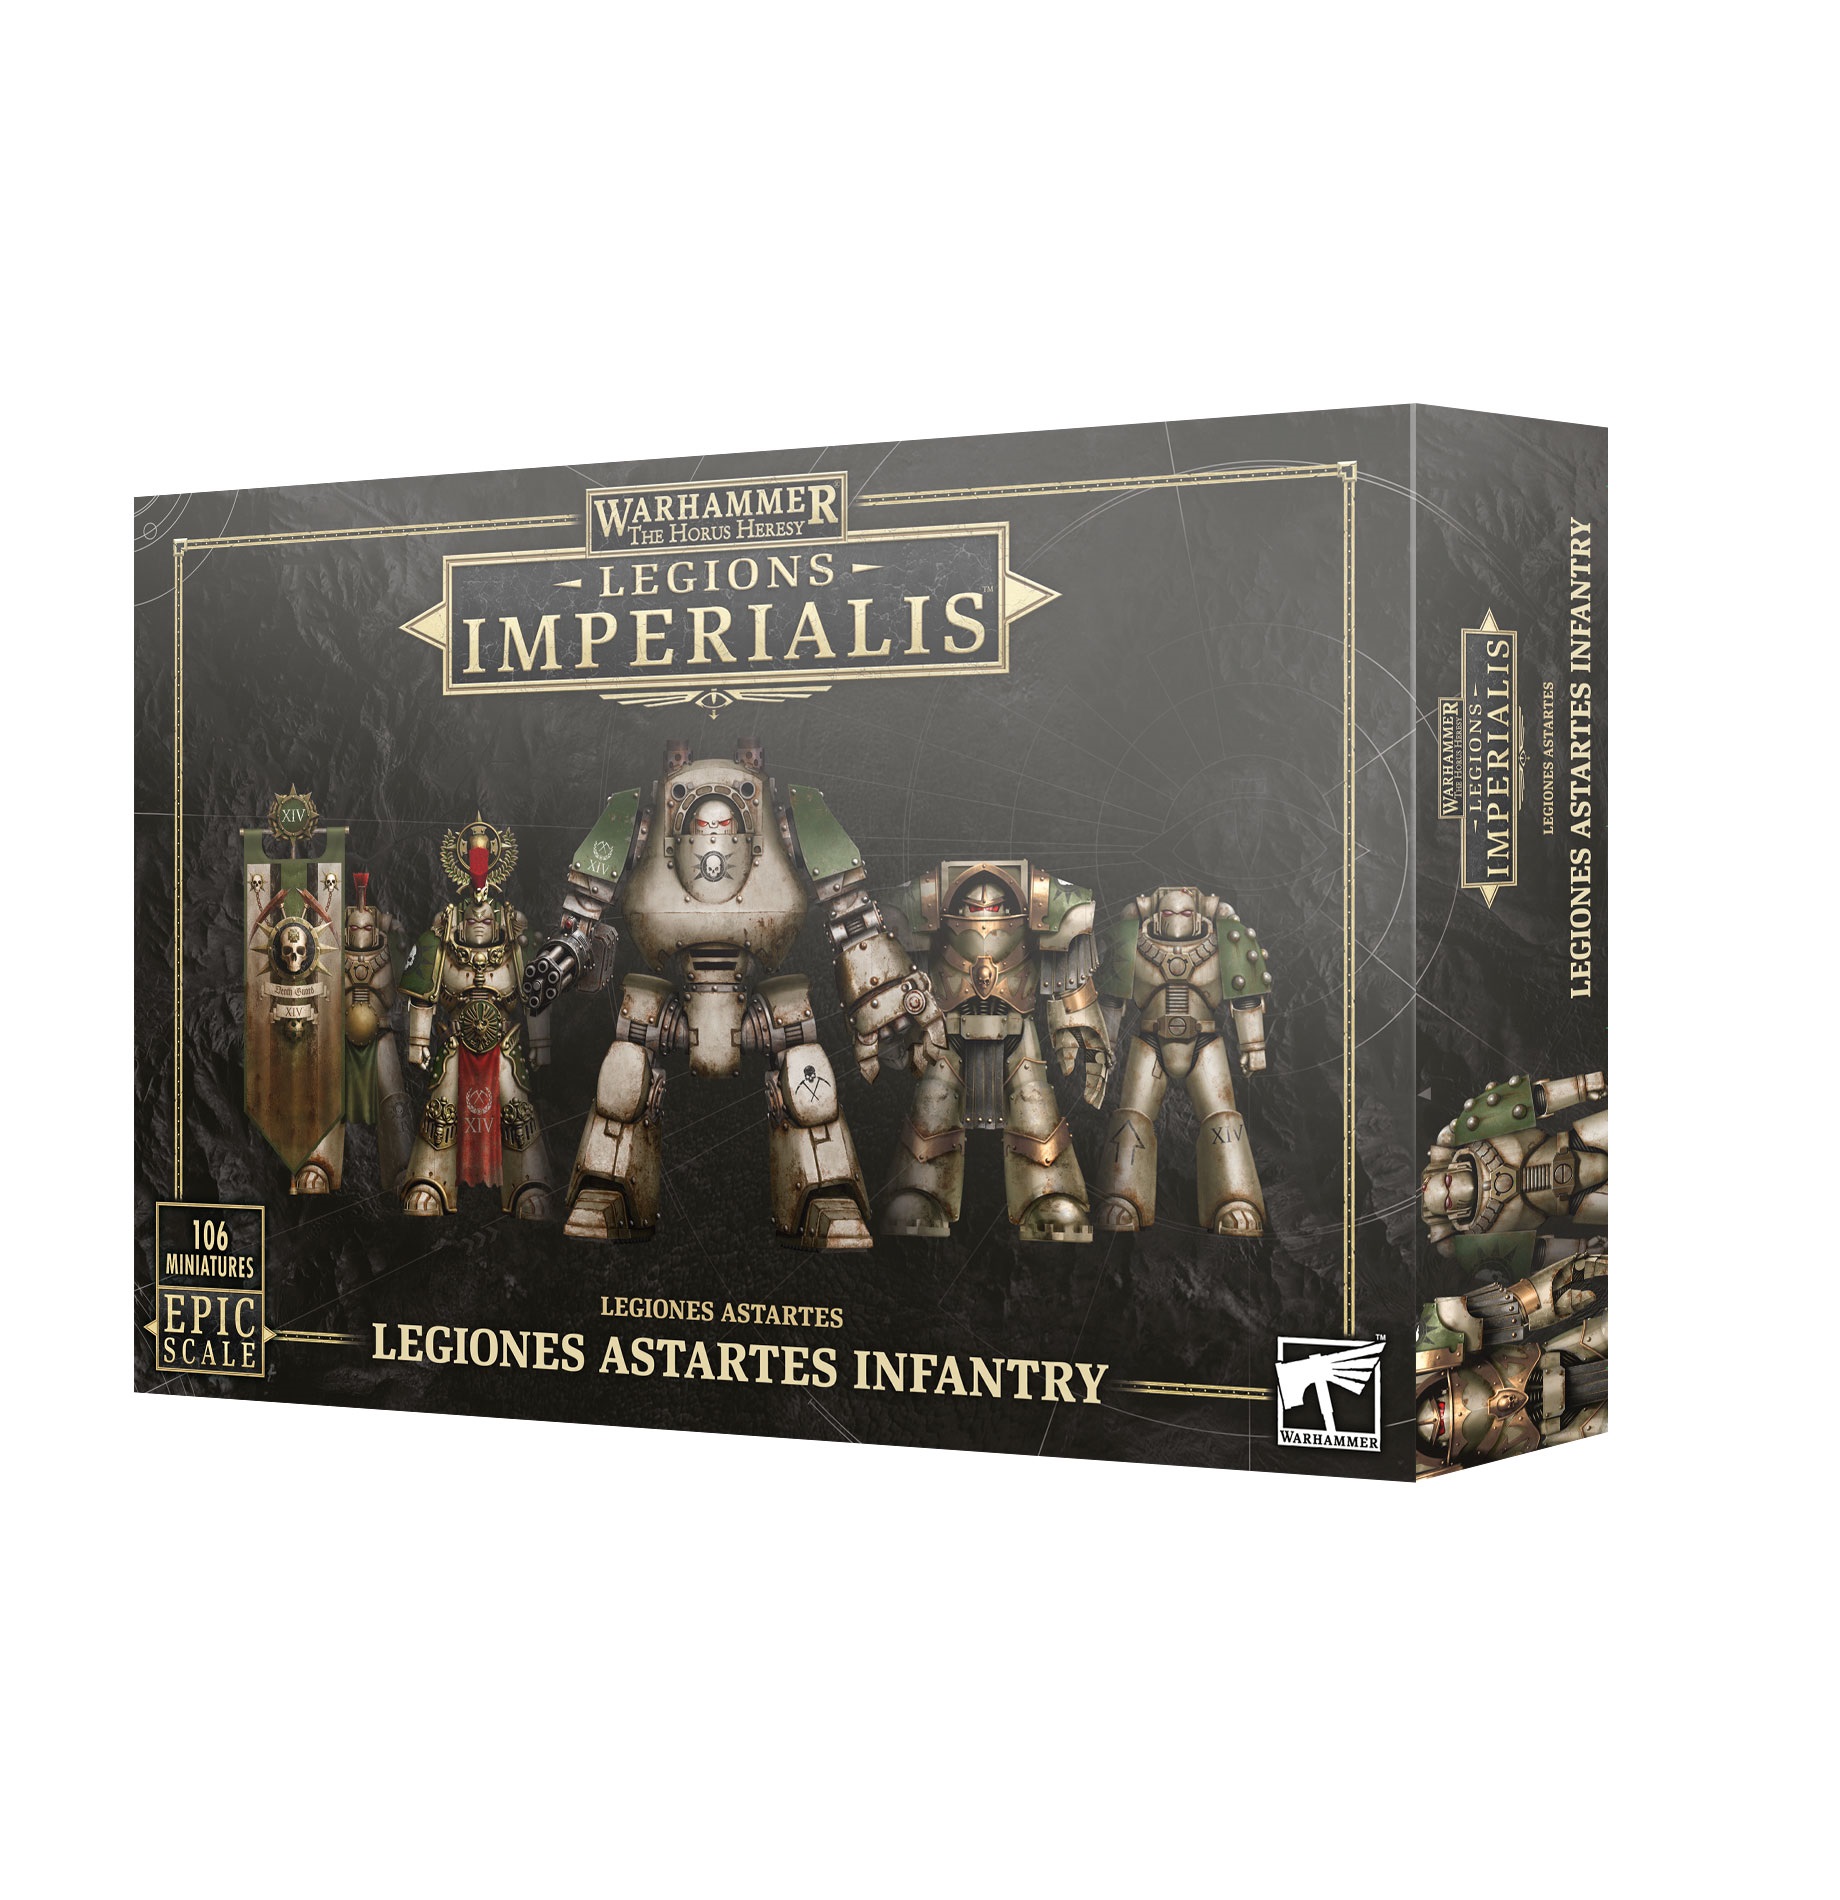 Legions Imperialis: Legions Astartes Infantry